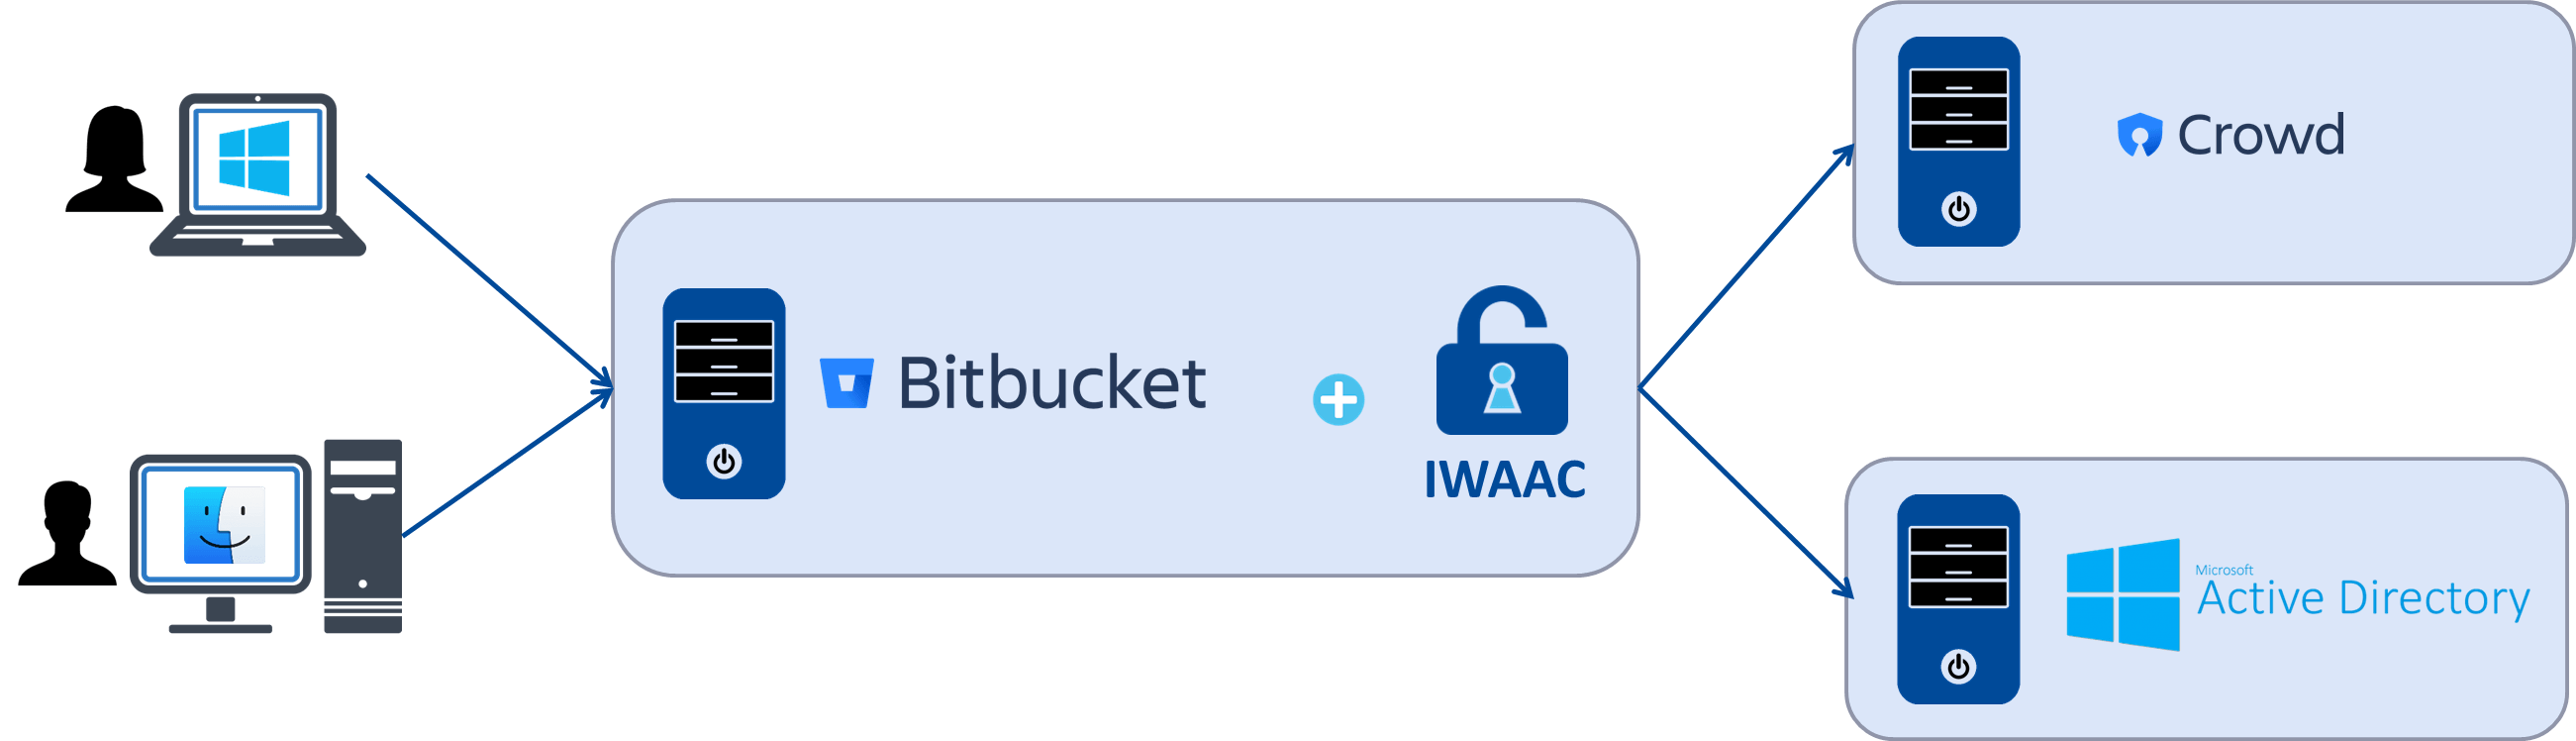 IWAAC for Bitbucket Overview